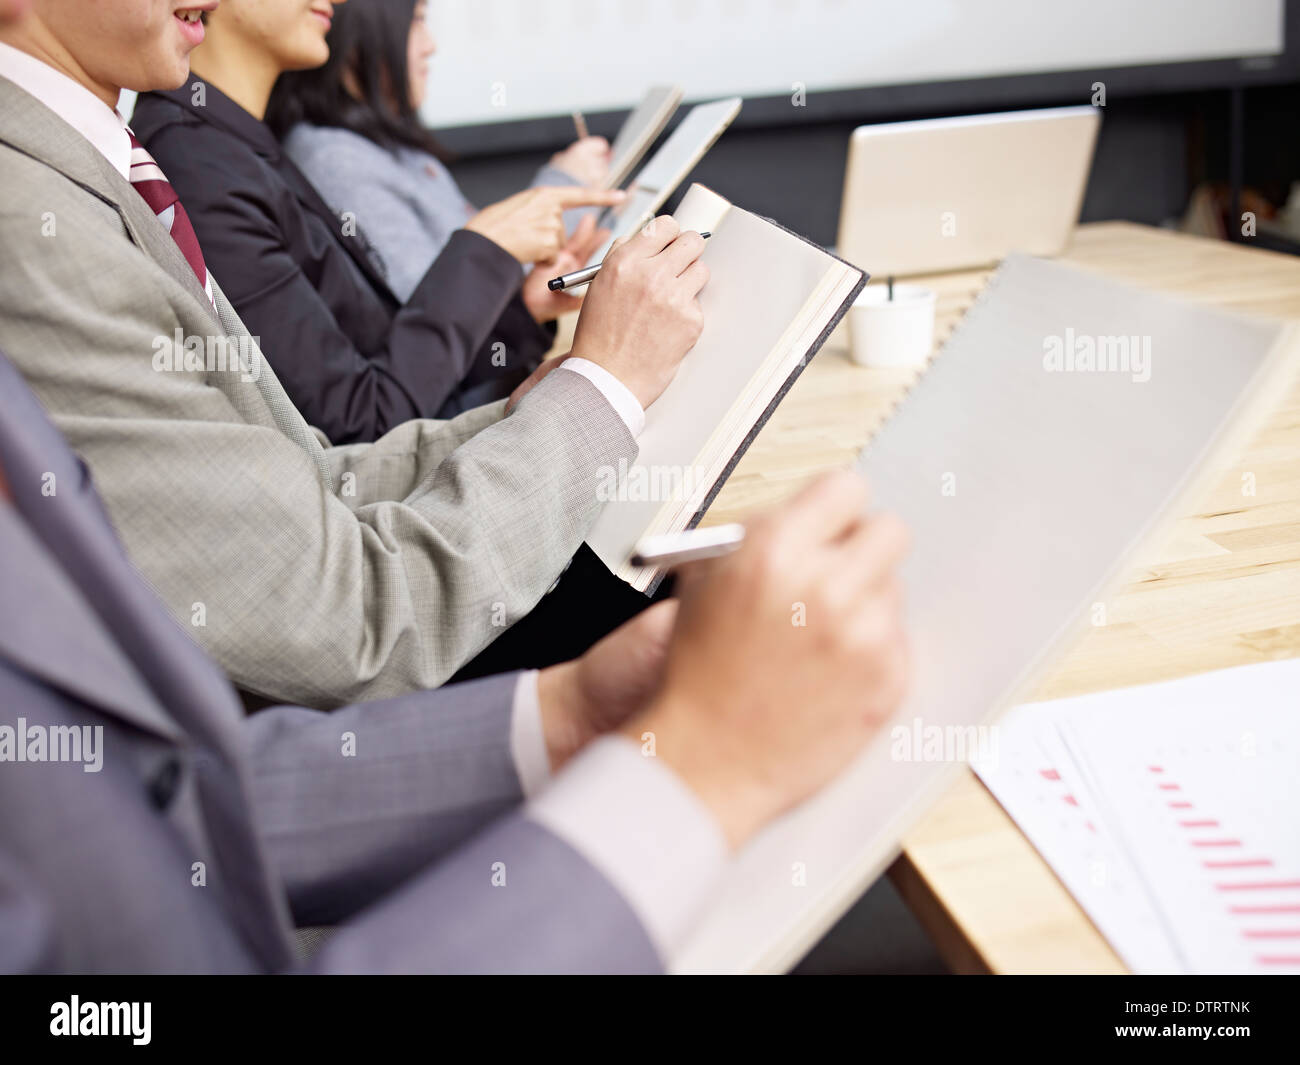 employee training business meeting Stock Photo